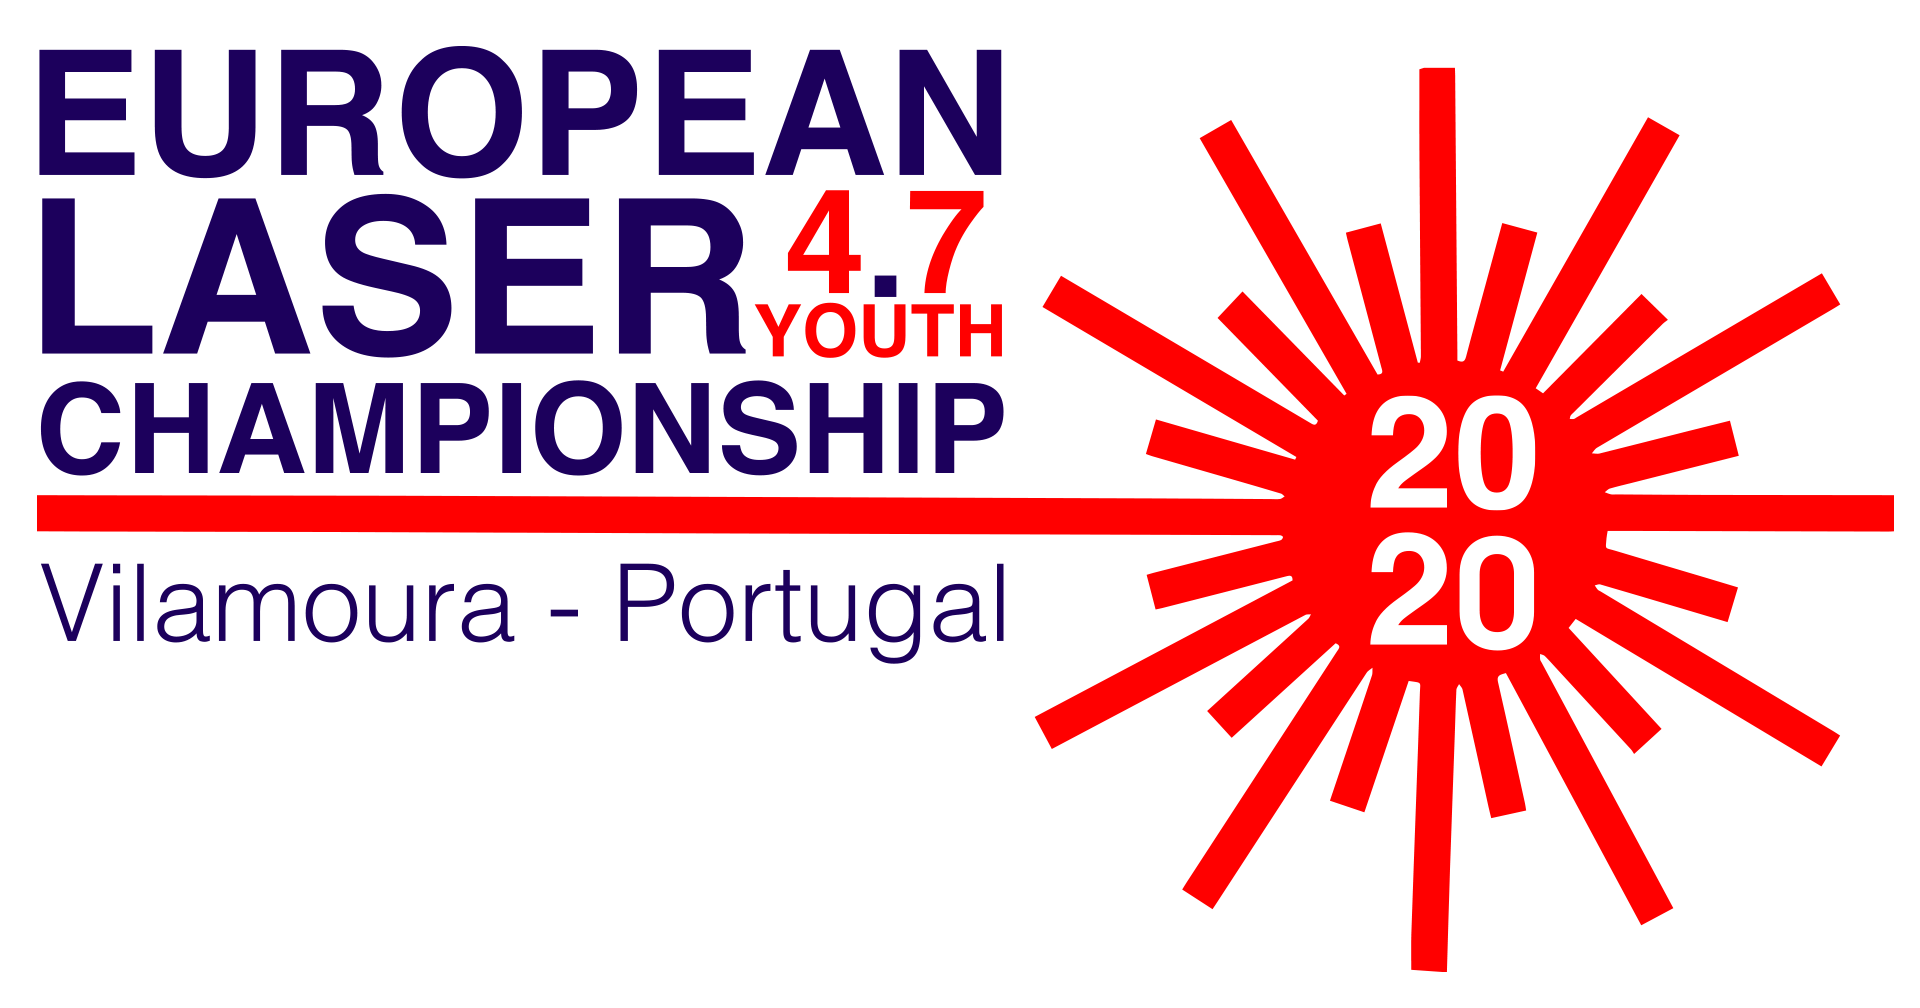 2020 laser 4.7 youth europeans logo